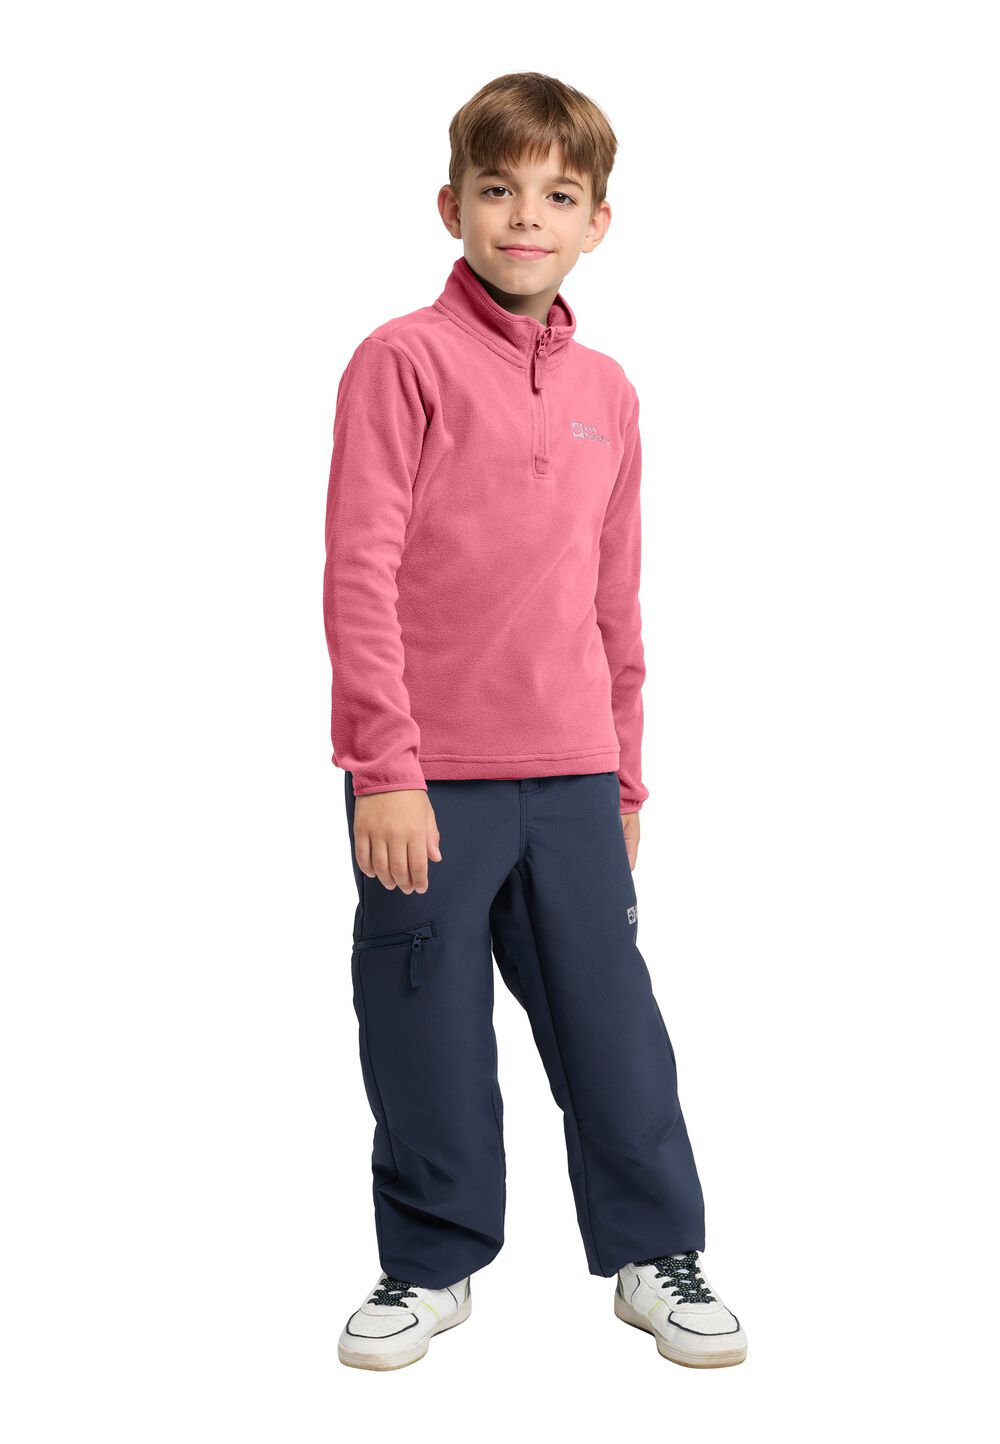 Jack Wolfskin Fleecepullover Kinder Taunus Halfzip Kids 152 soft pink soft pink von Jack Wolfskin